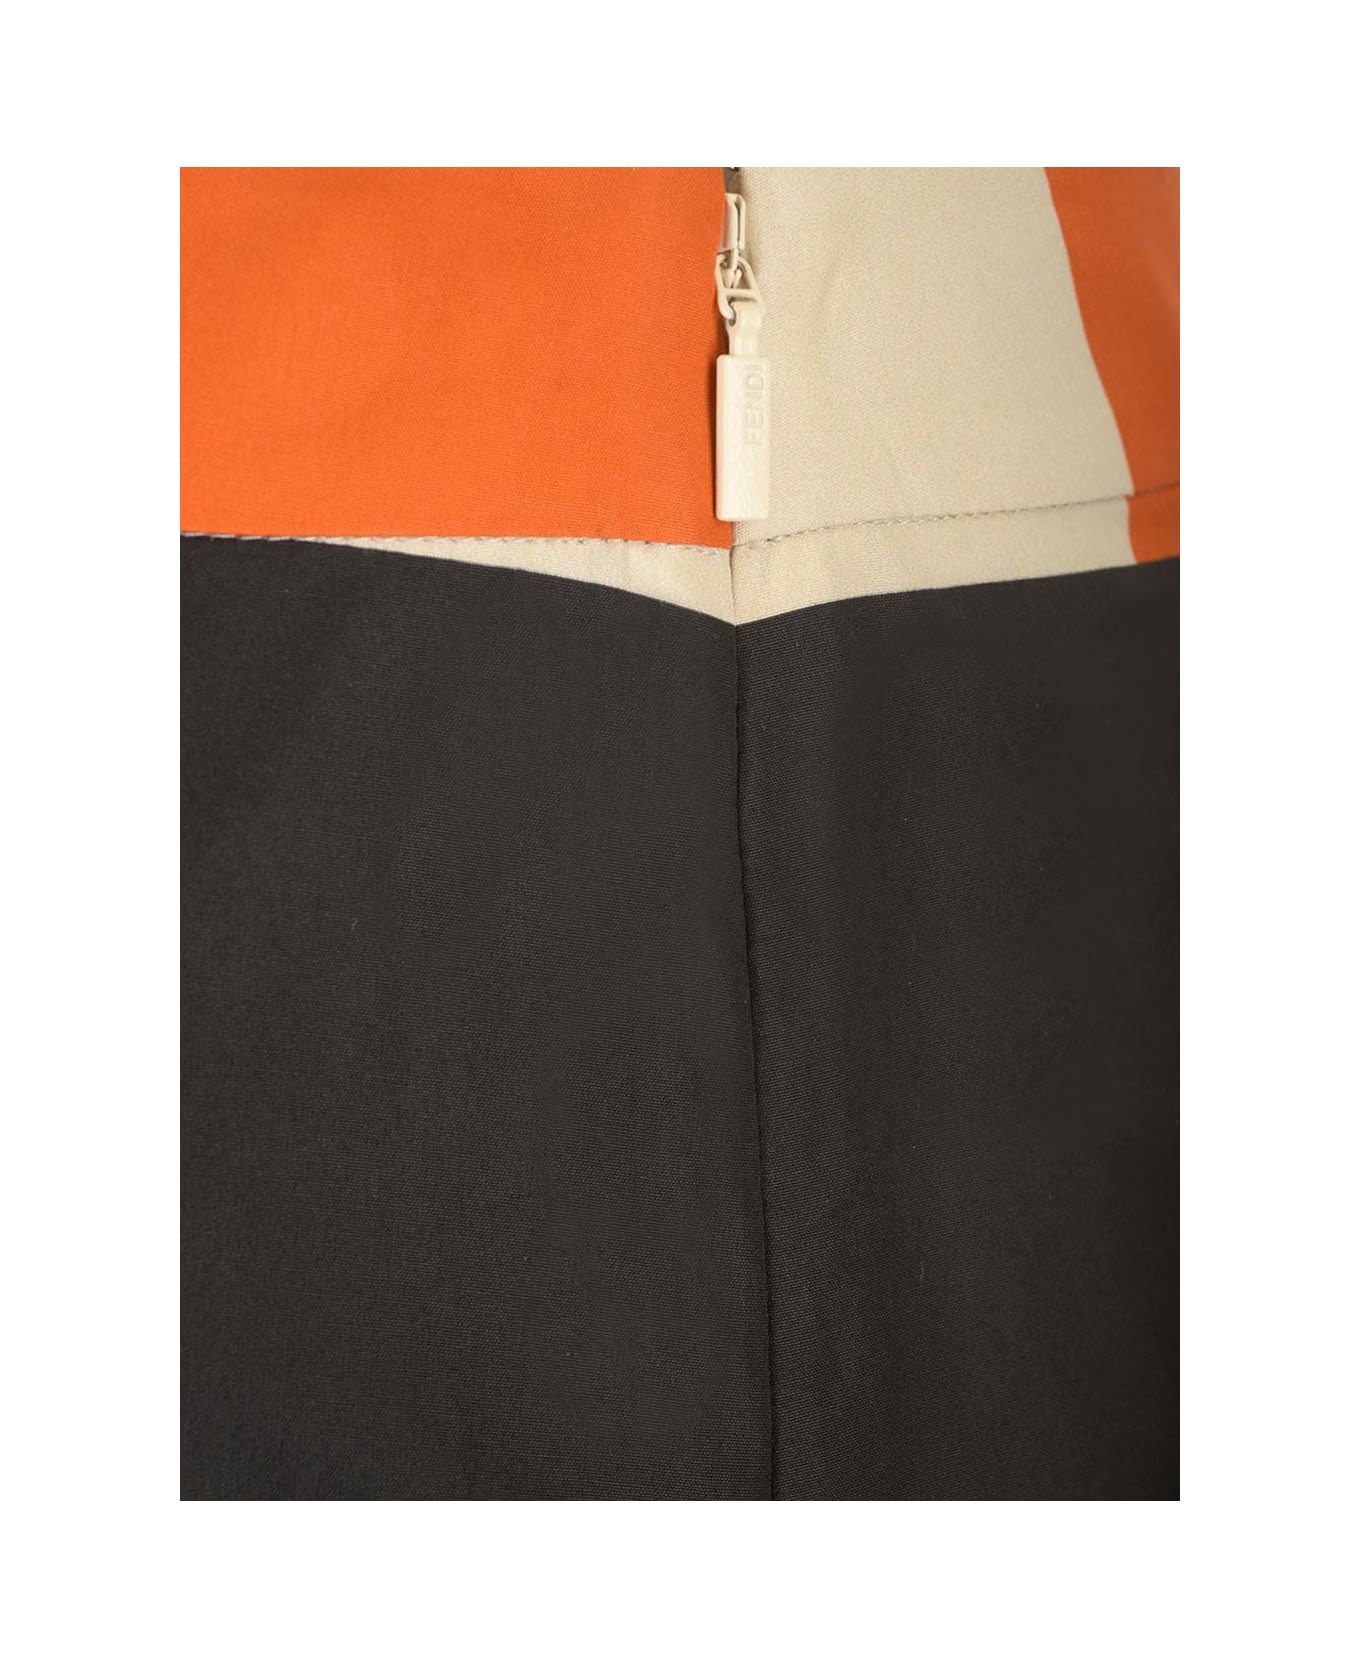 Fendi Multicolor Printed Poplin Skirt - Orange/ash